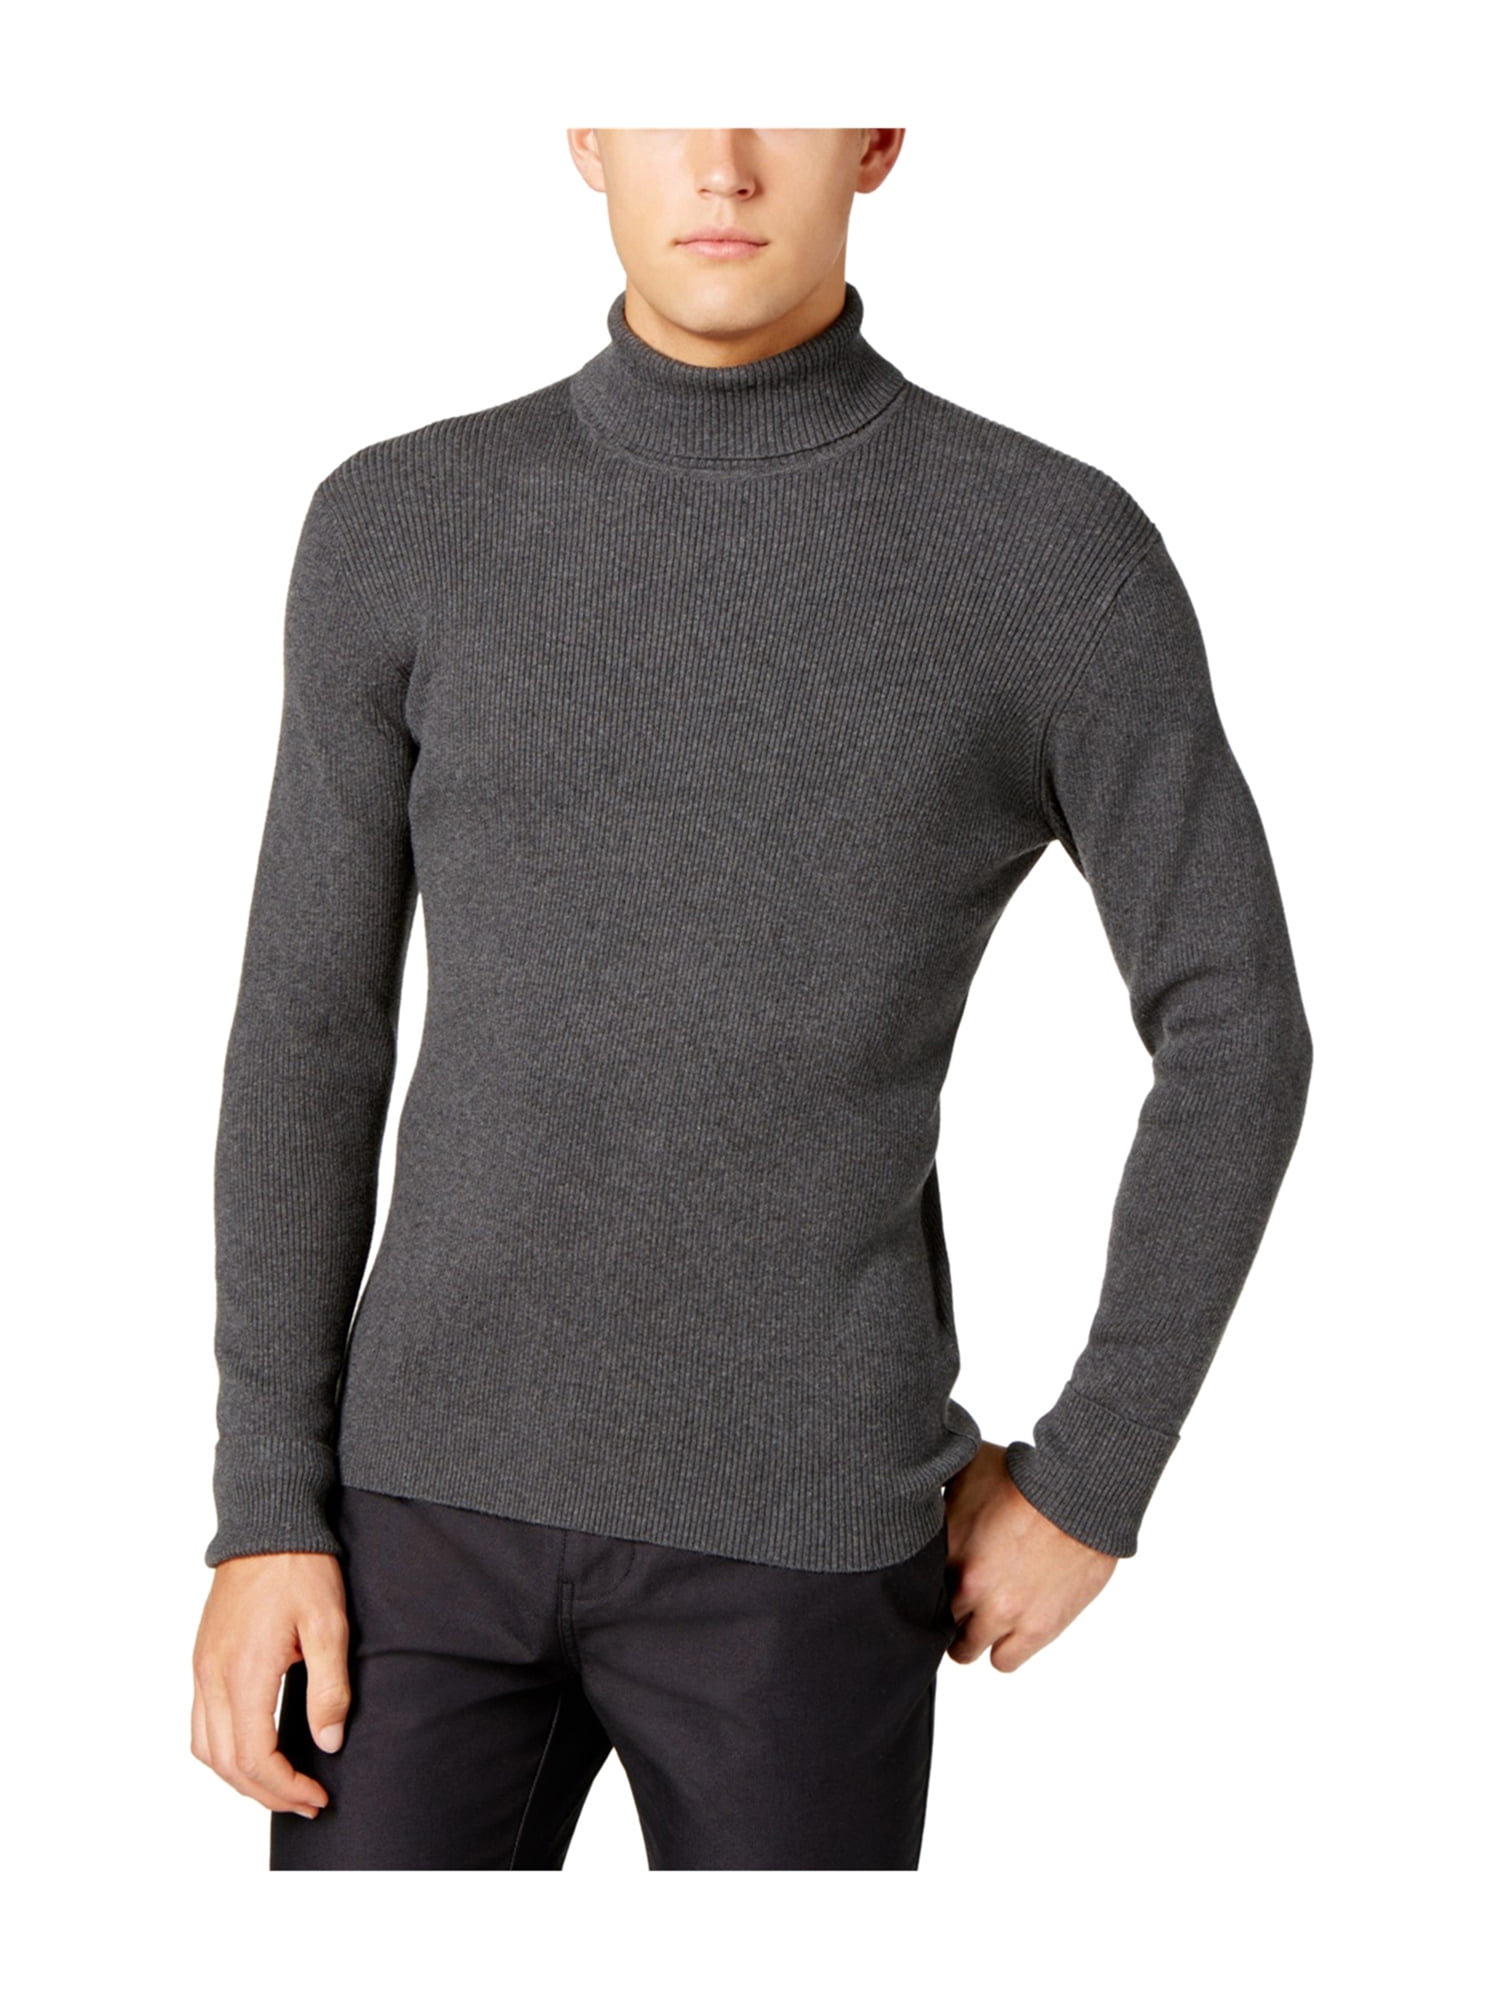 Ryan Seacrest Distinction Mens Medium Crewneck Sweater Grays 